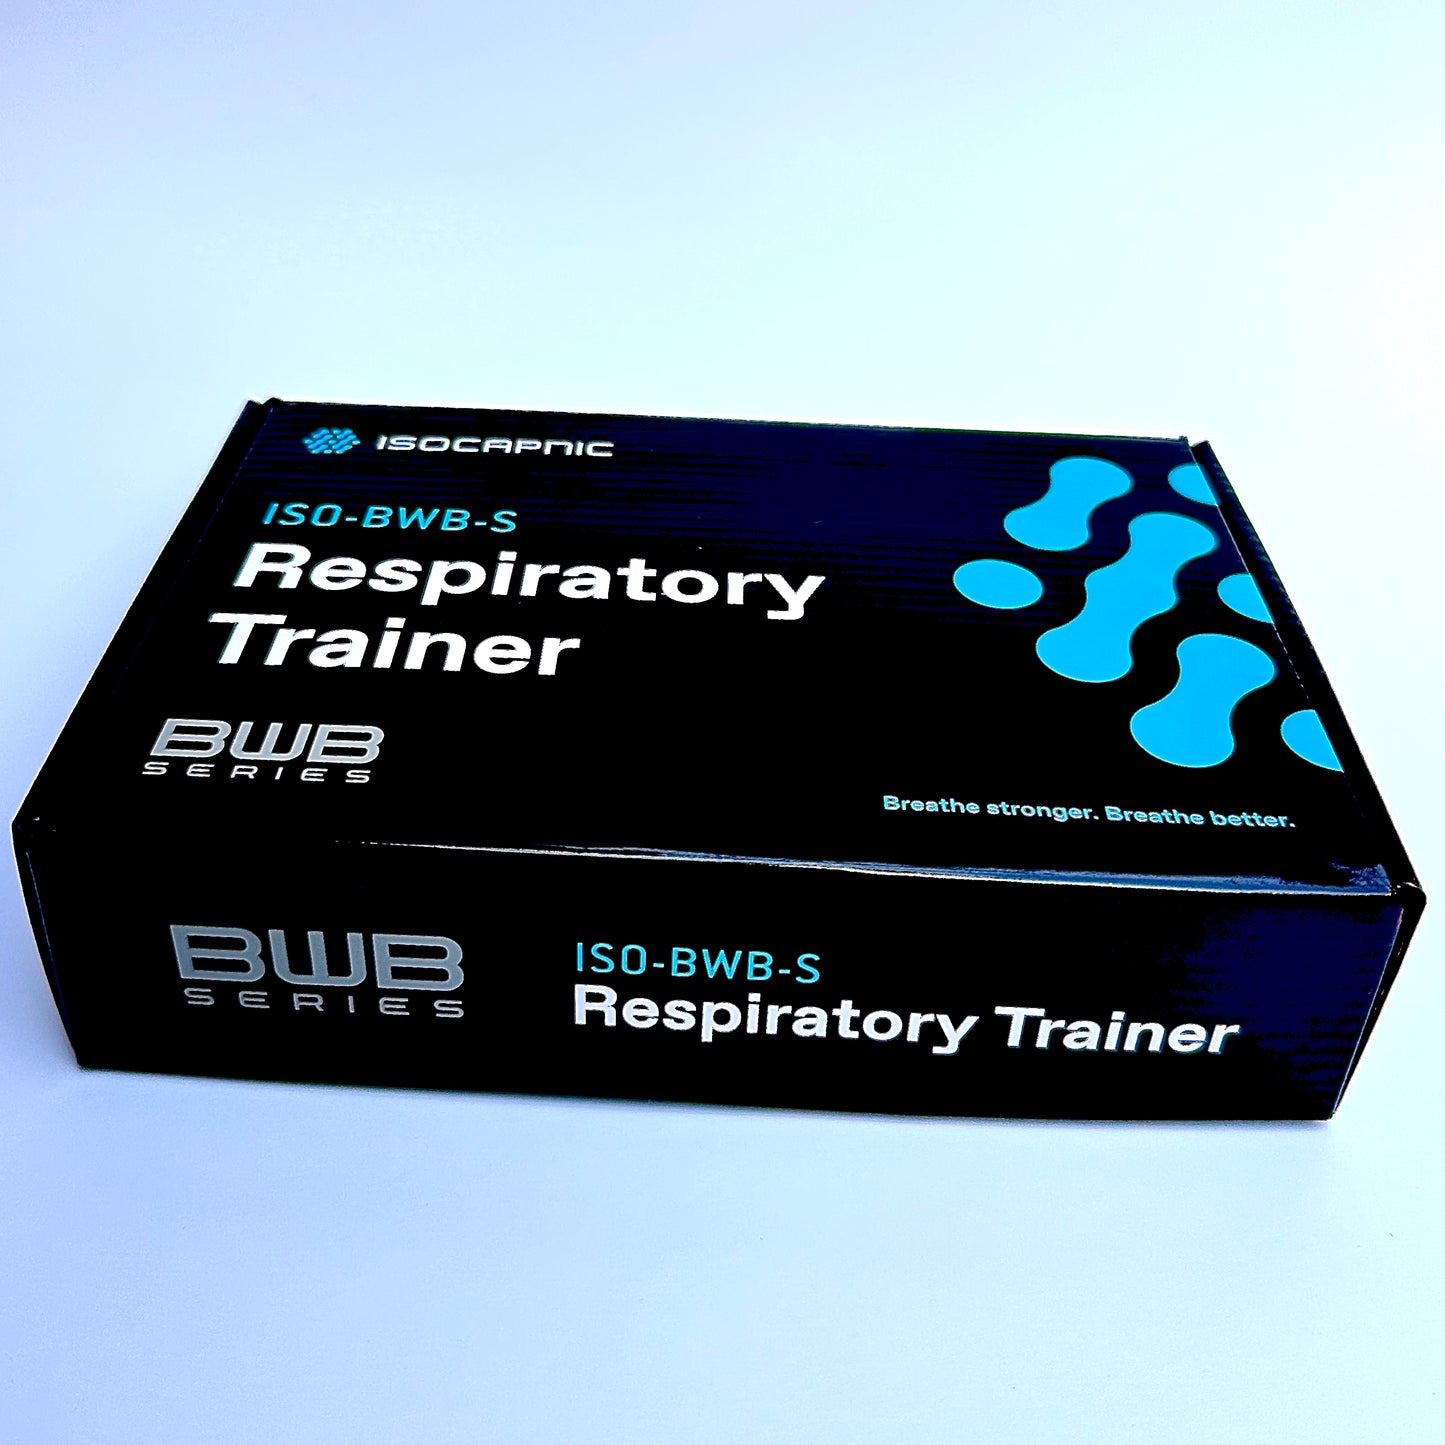 ISO-BWB-S Respiratory Trainer